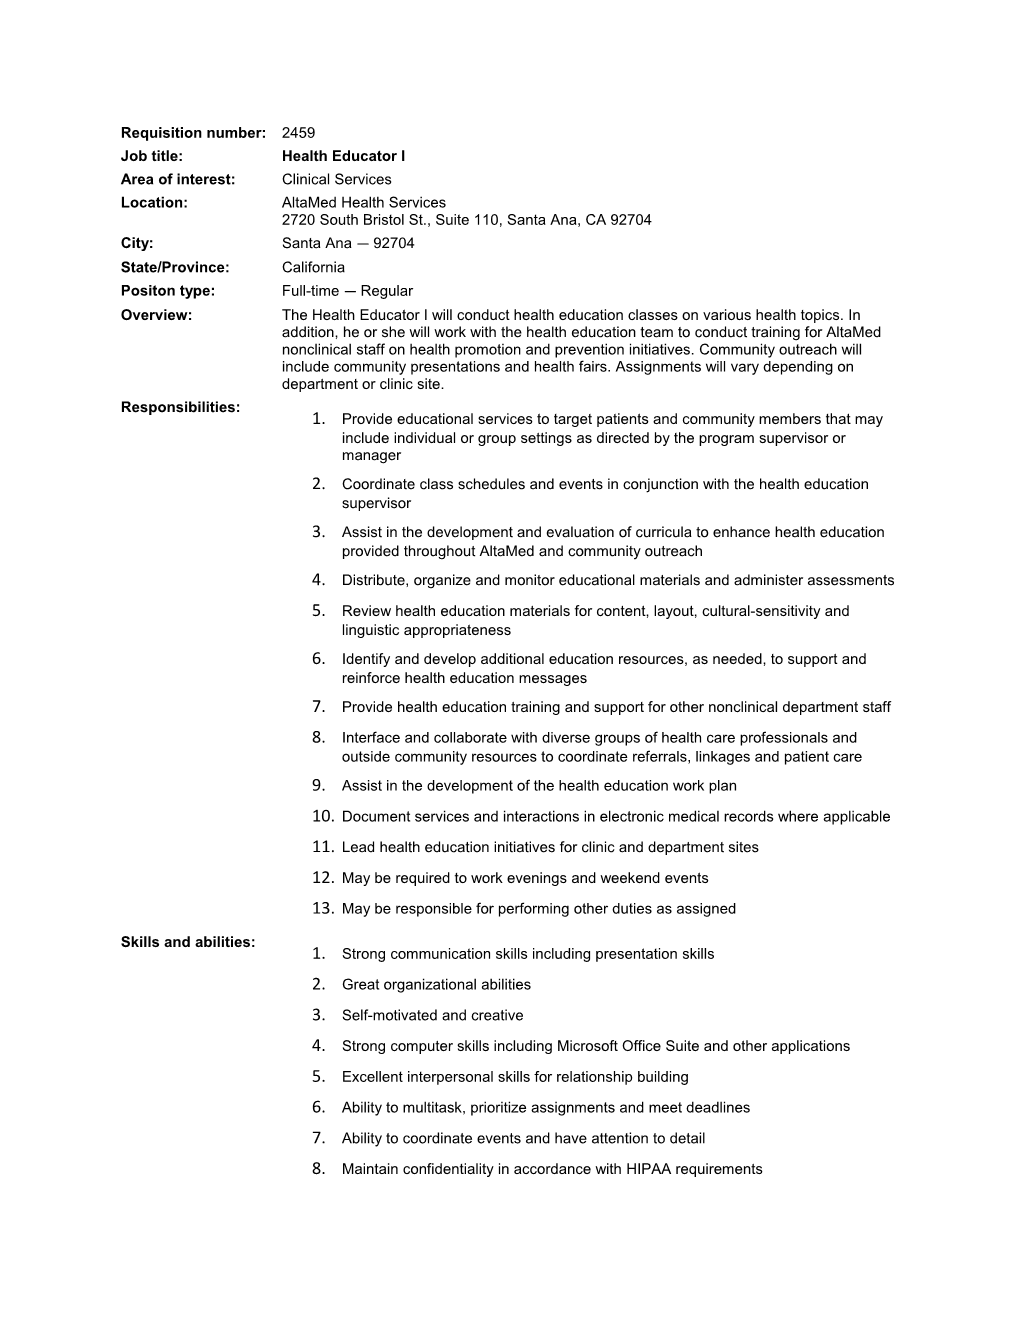 Health Educator Job Description Sample